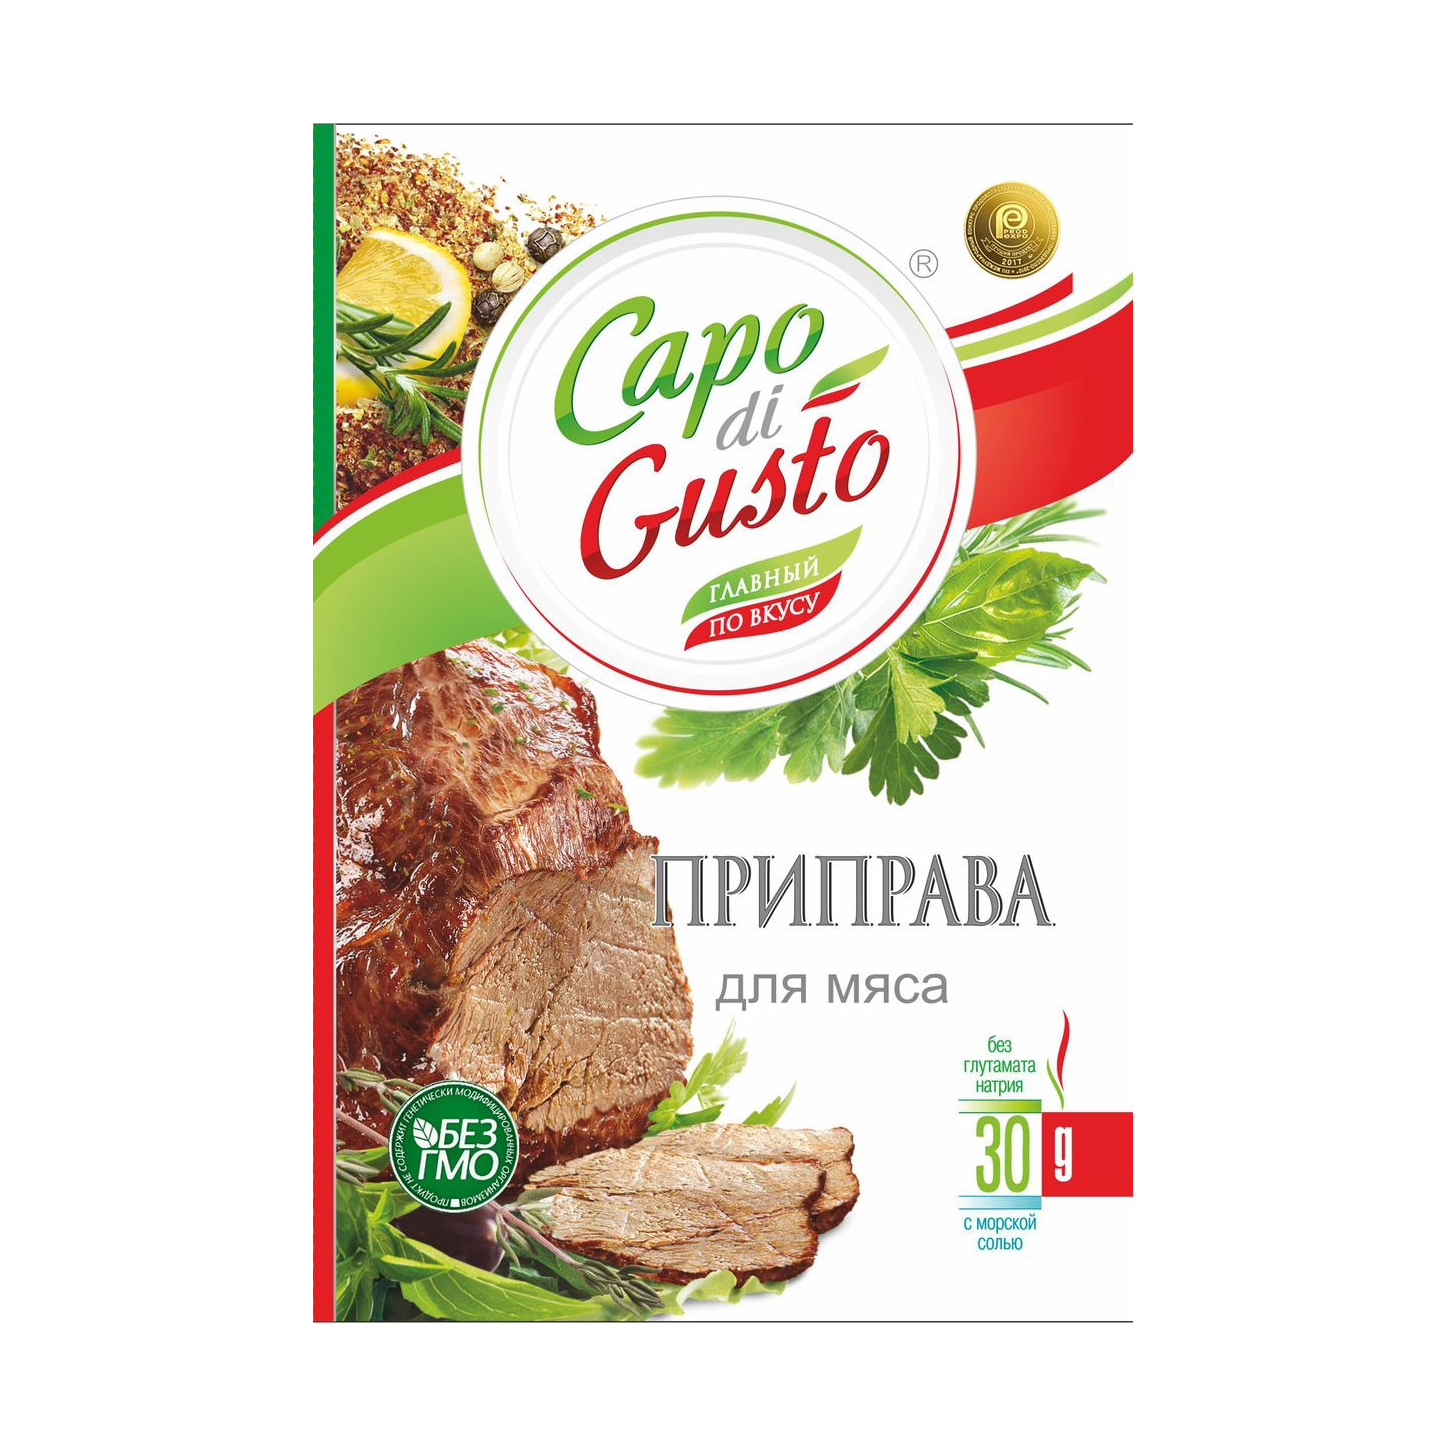 Приправа Capo di Gusto для мяса 30 г перец черный молотый capo di gusto 50 г